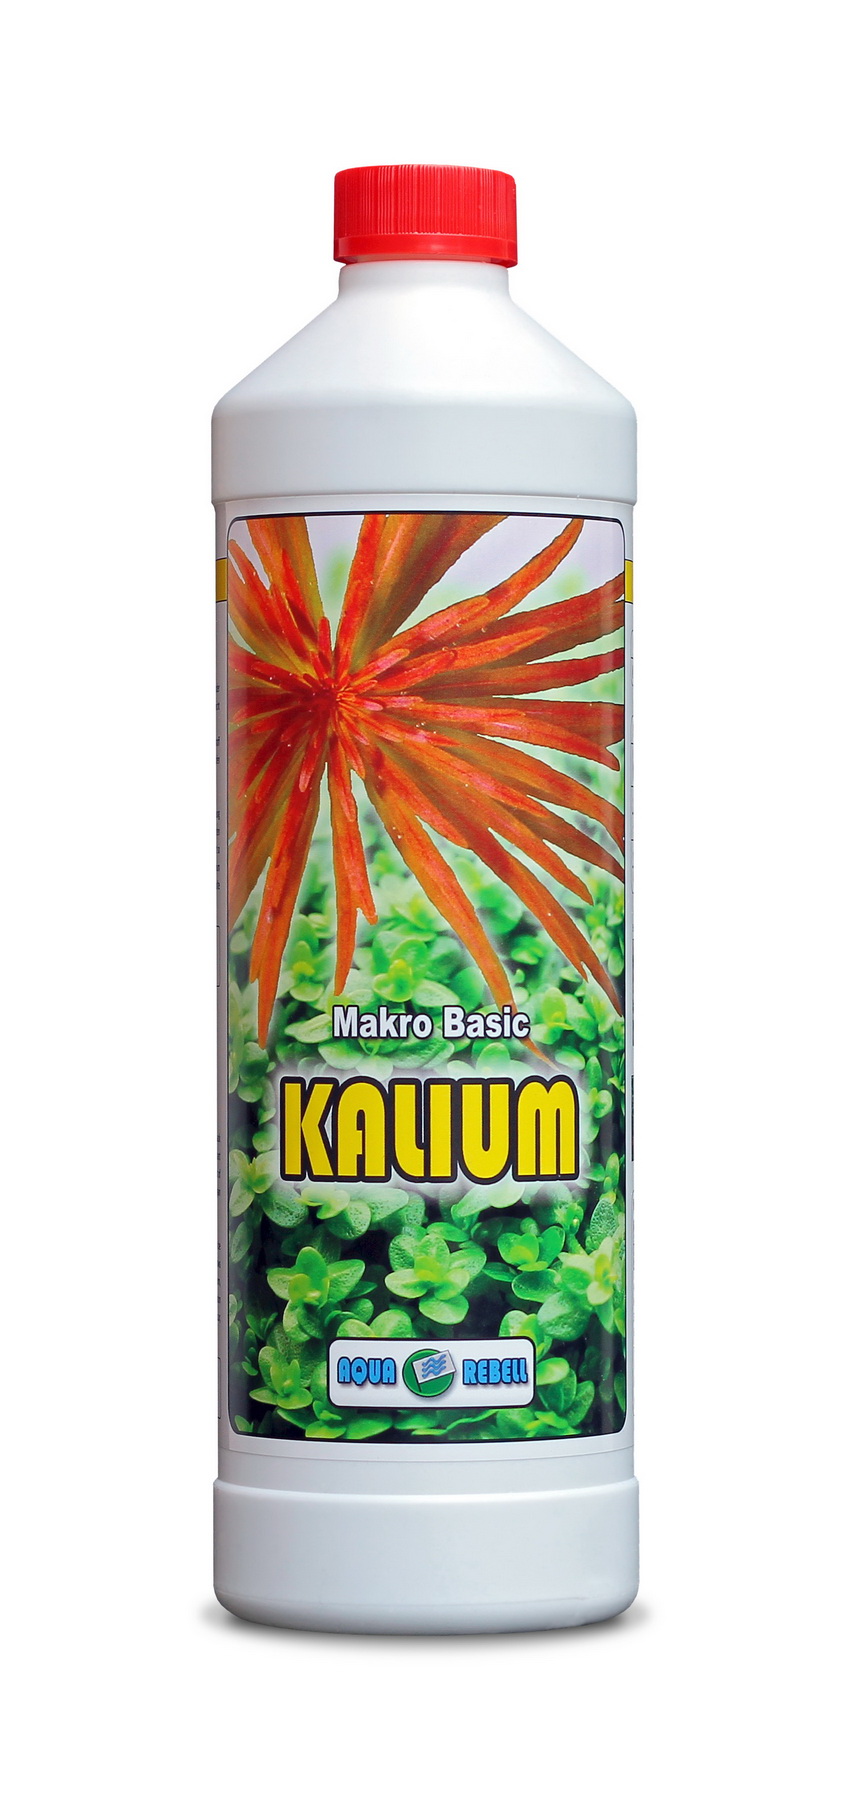 Aqua Rebell Kalium 1000ml - nawóz potasowy